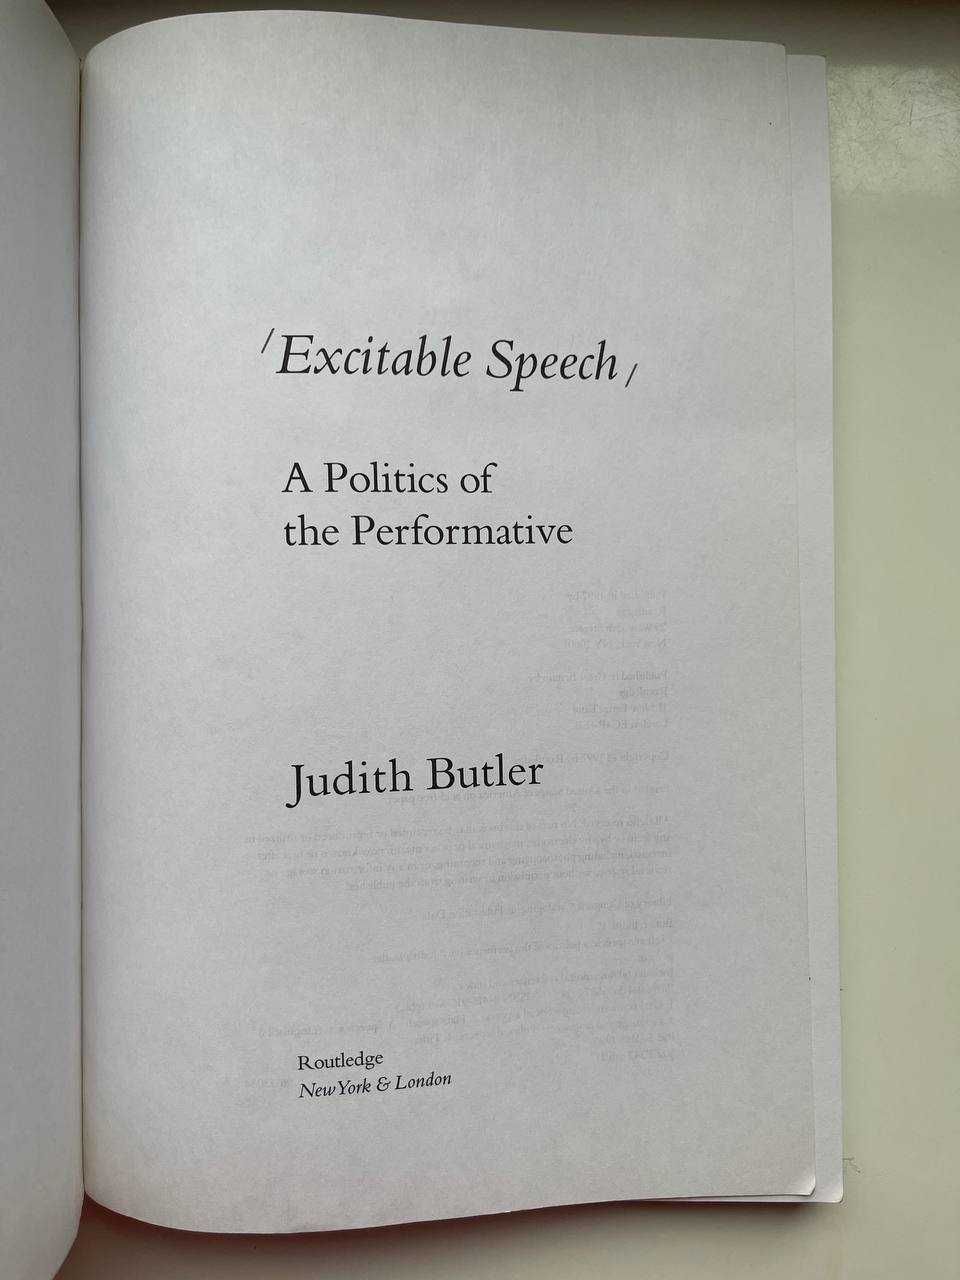 Judith Butler. Excitable Speech: A Politics of the Performative. 1997.